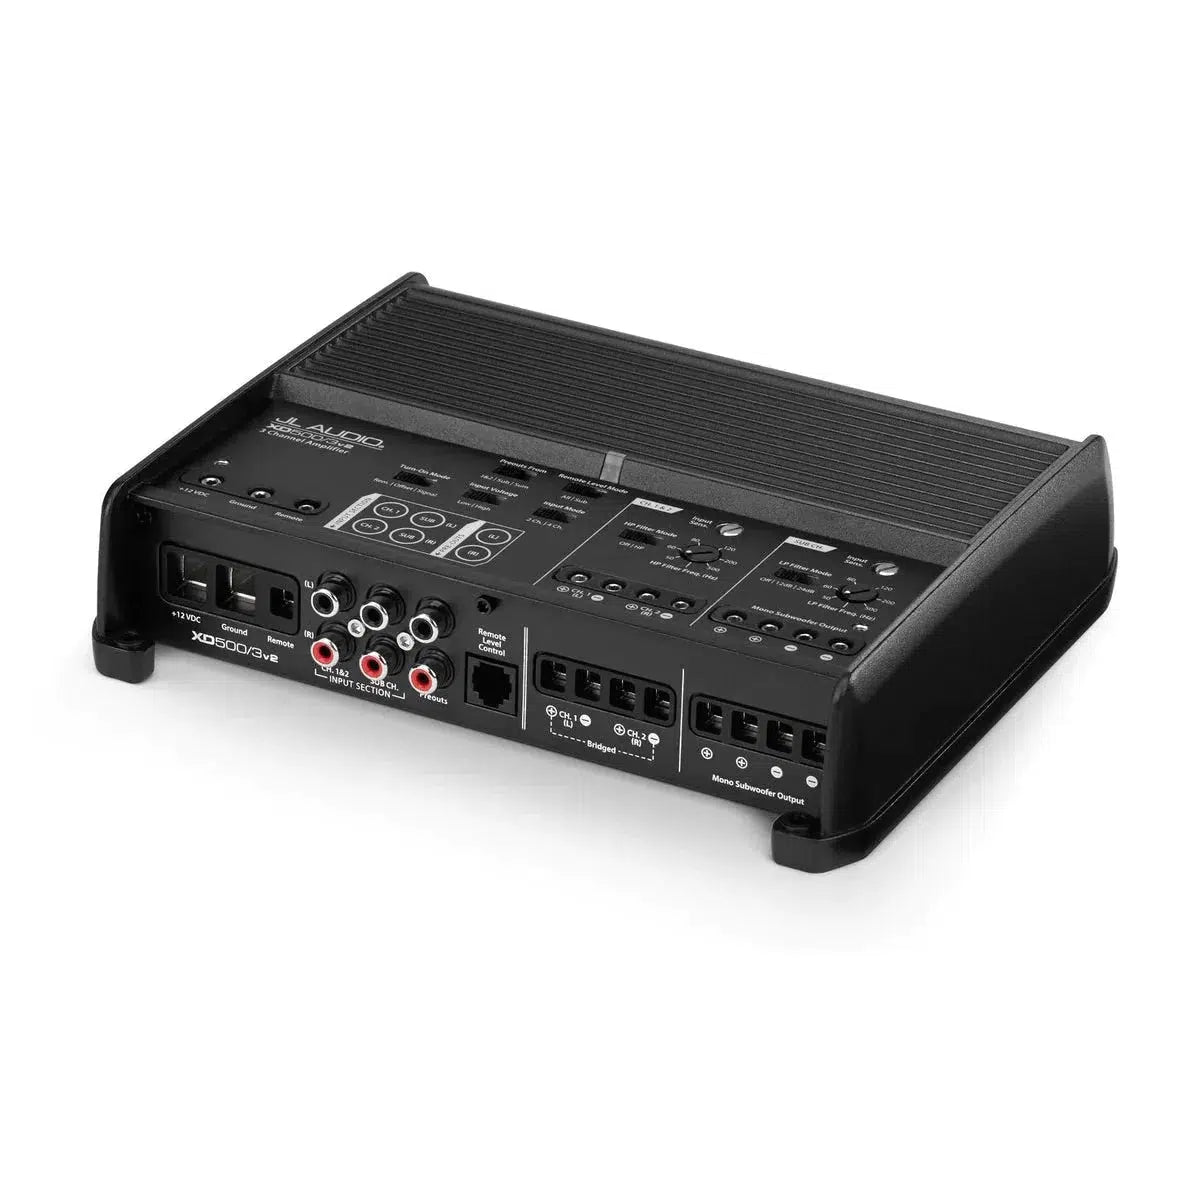 JL Audio-XD500/3V2-3-Channel Amplifier-Masori.de